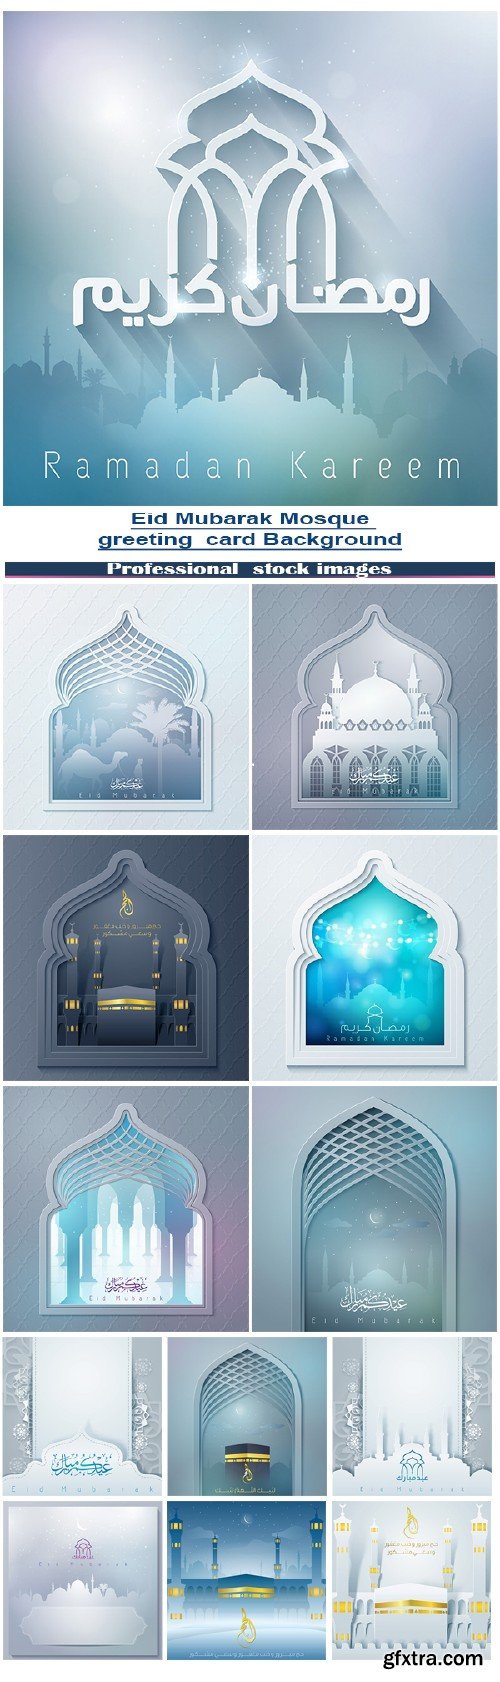 Eid Mubarak Mosque greeting card background